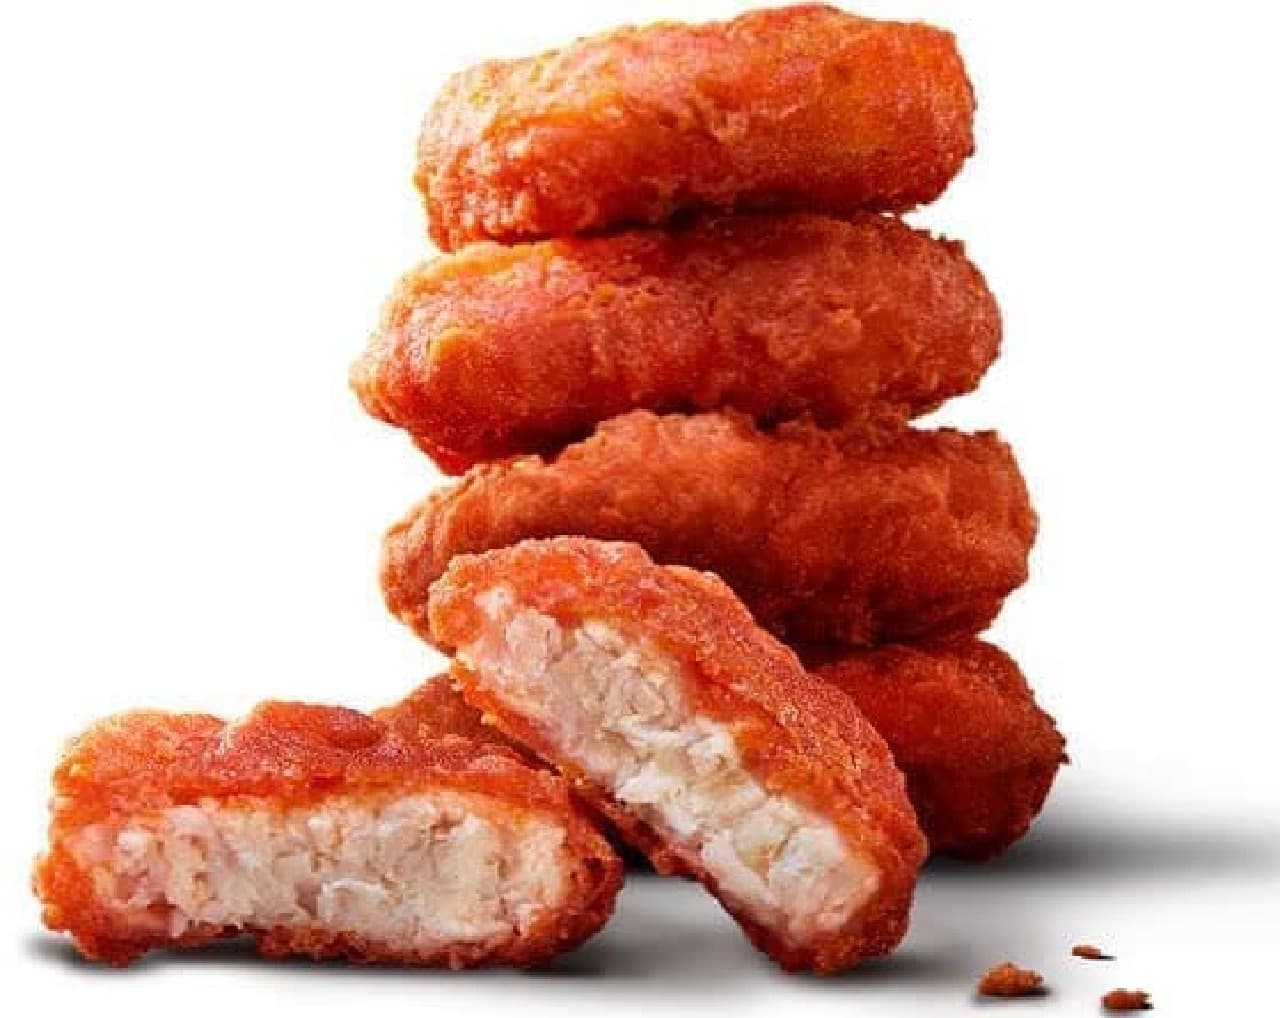 McDonald's "Spicy Chicken McNugget"